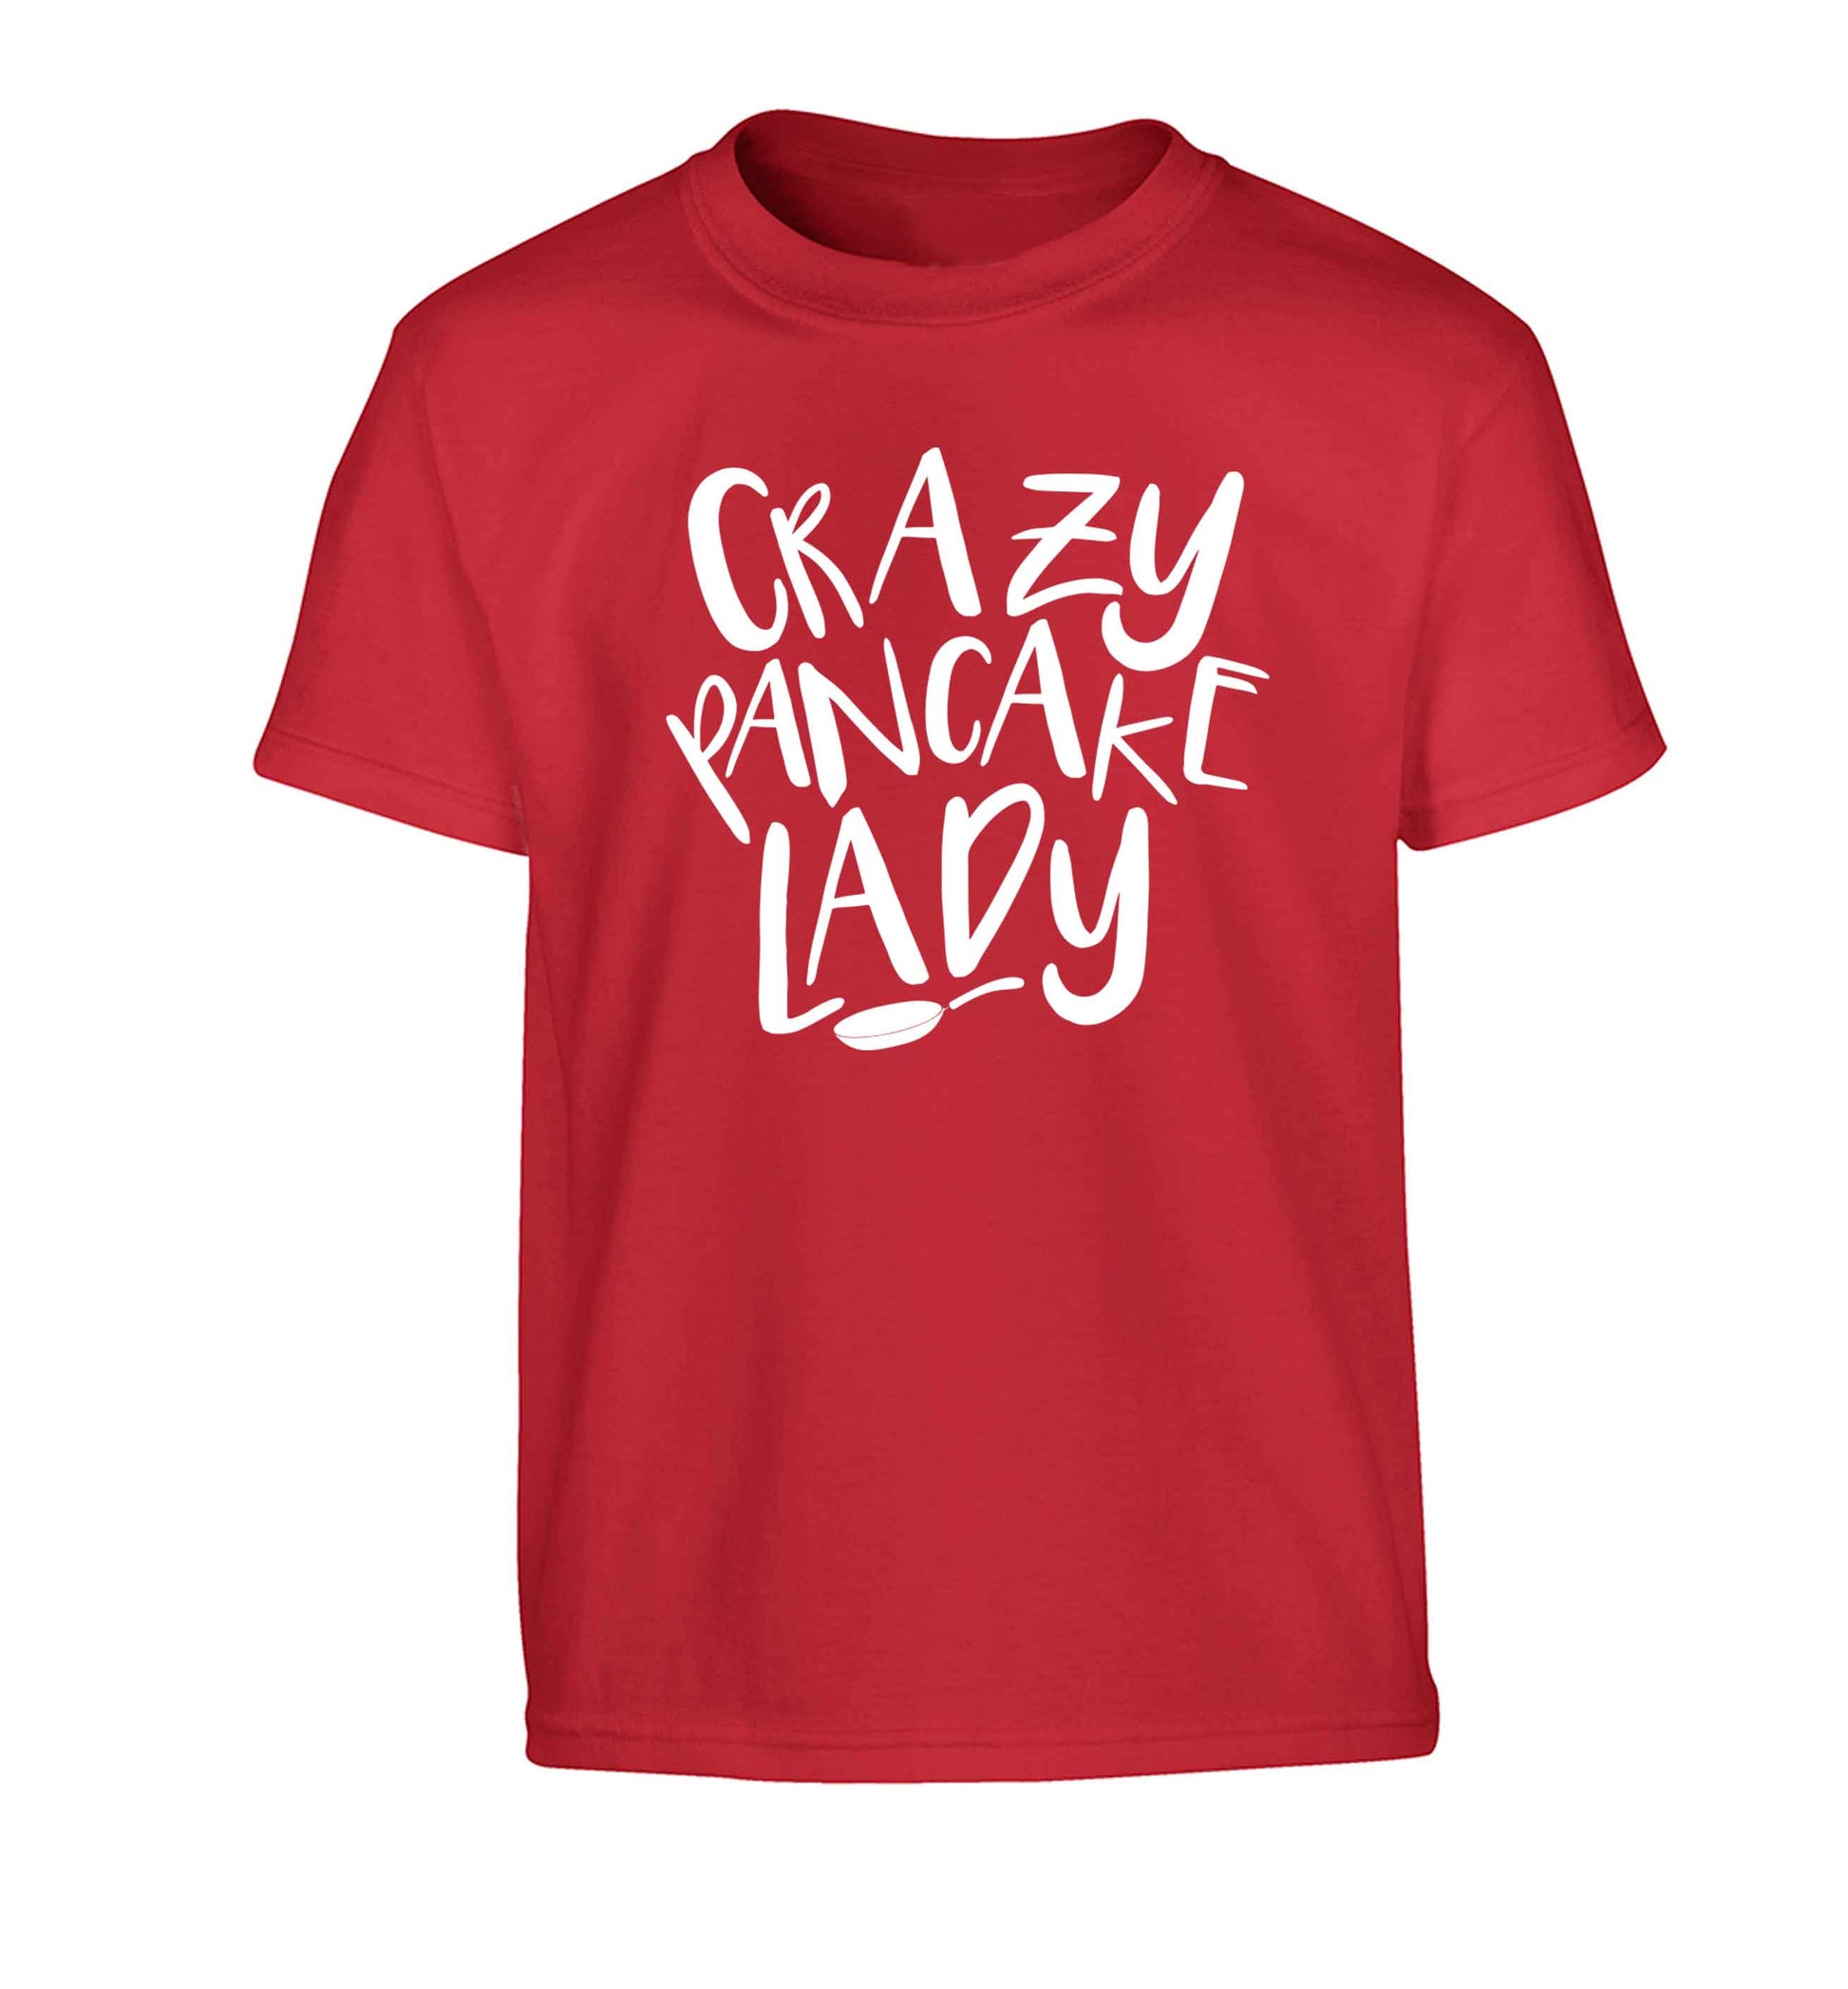 Crazy pancake lady Children's red Tshirt 12-13 Years